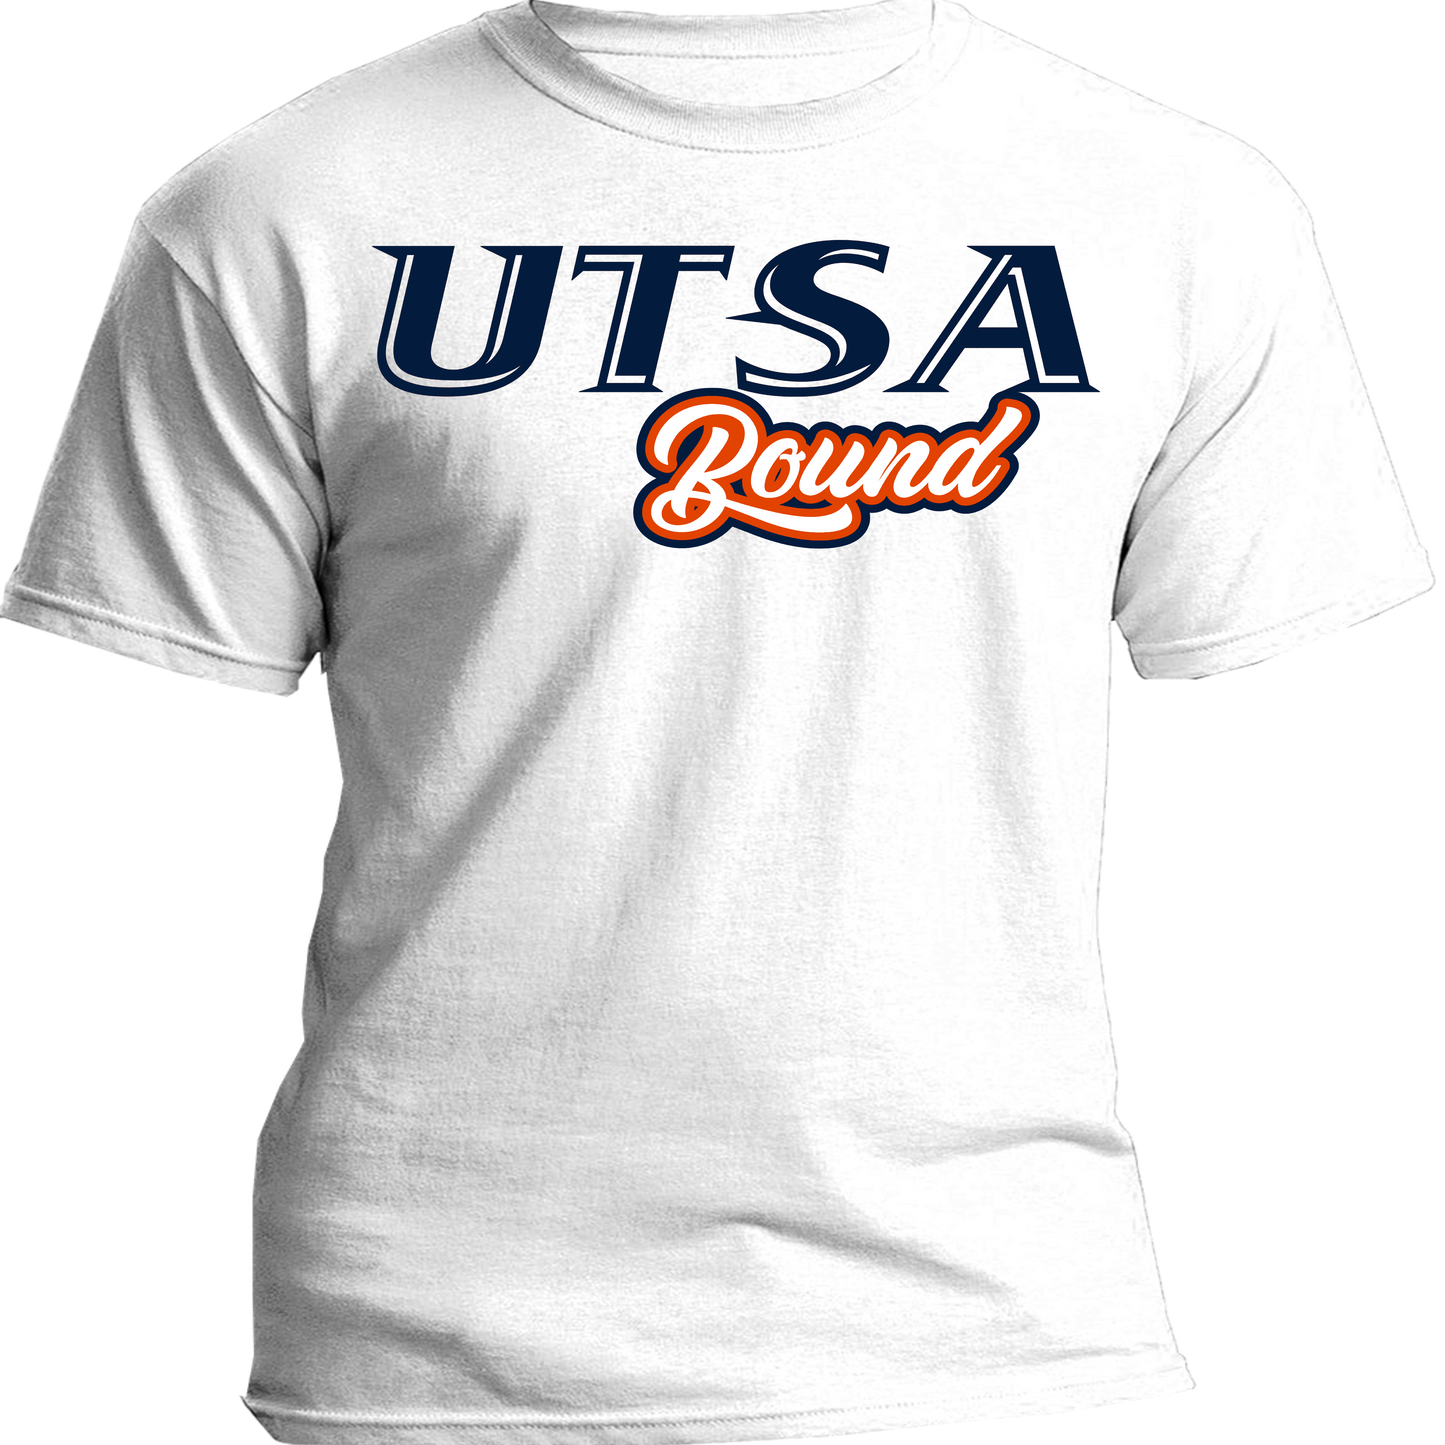 UTSA Bound Freshman Shirts